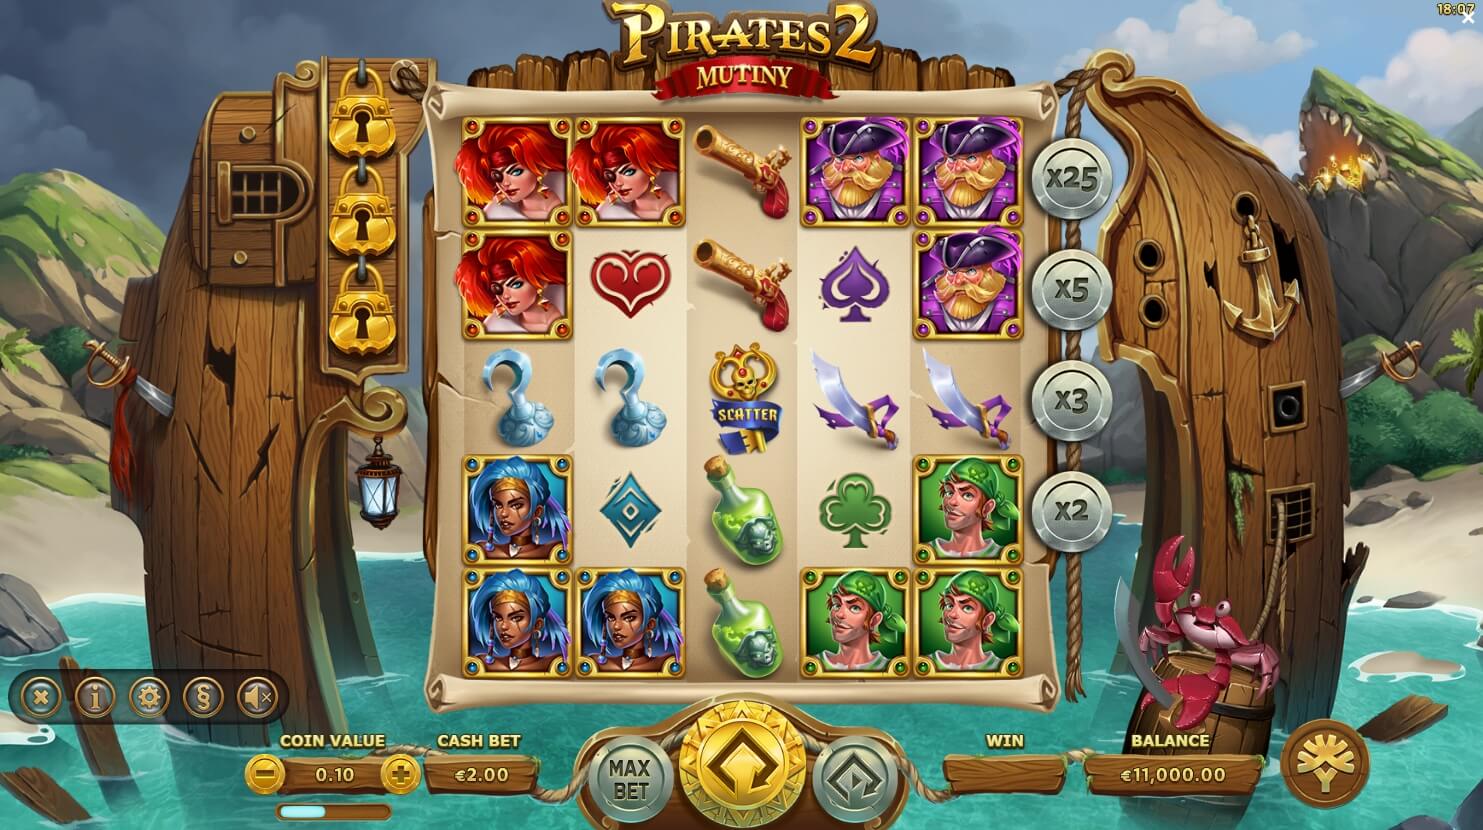 Pirates 2 Mutiny Yggdrasil สล็อตโจ๊กเกอร์